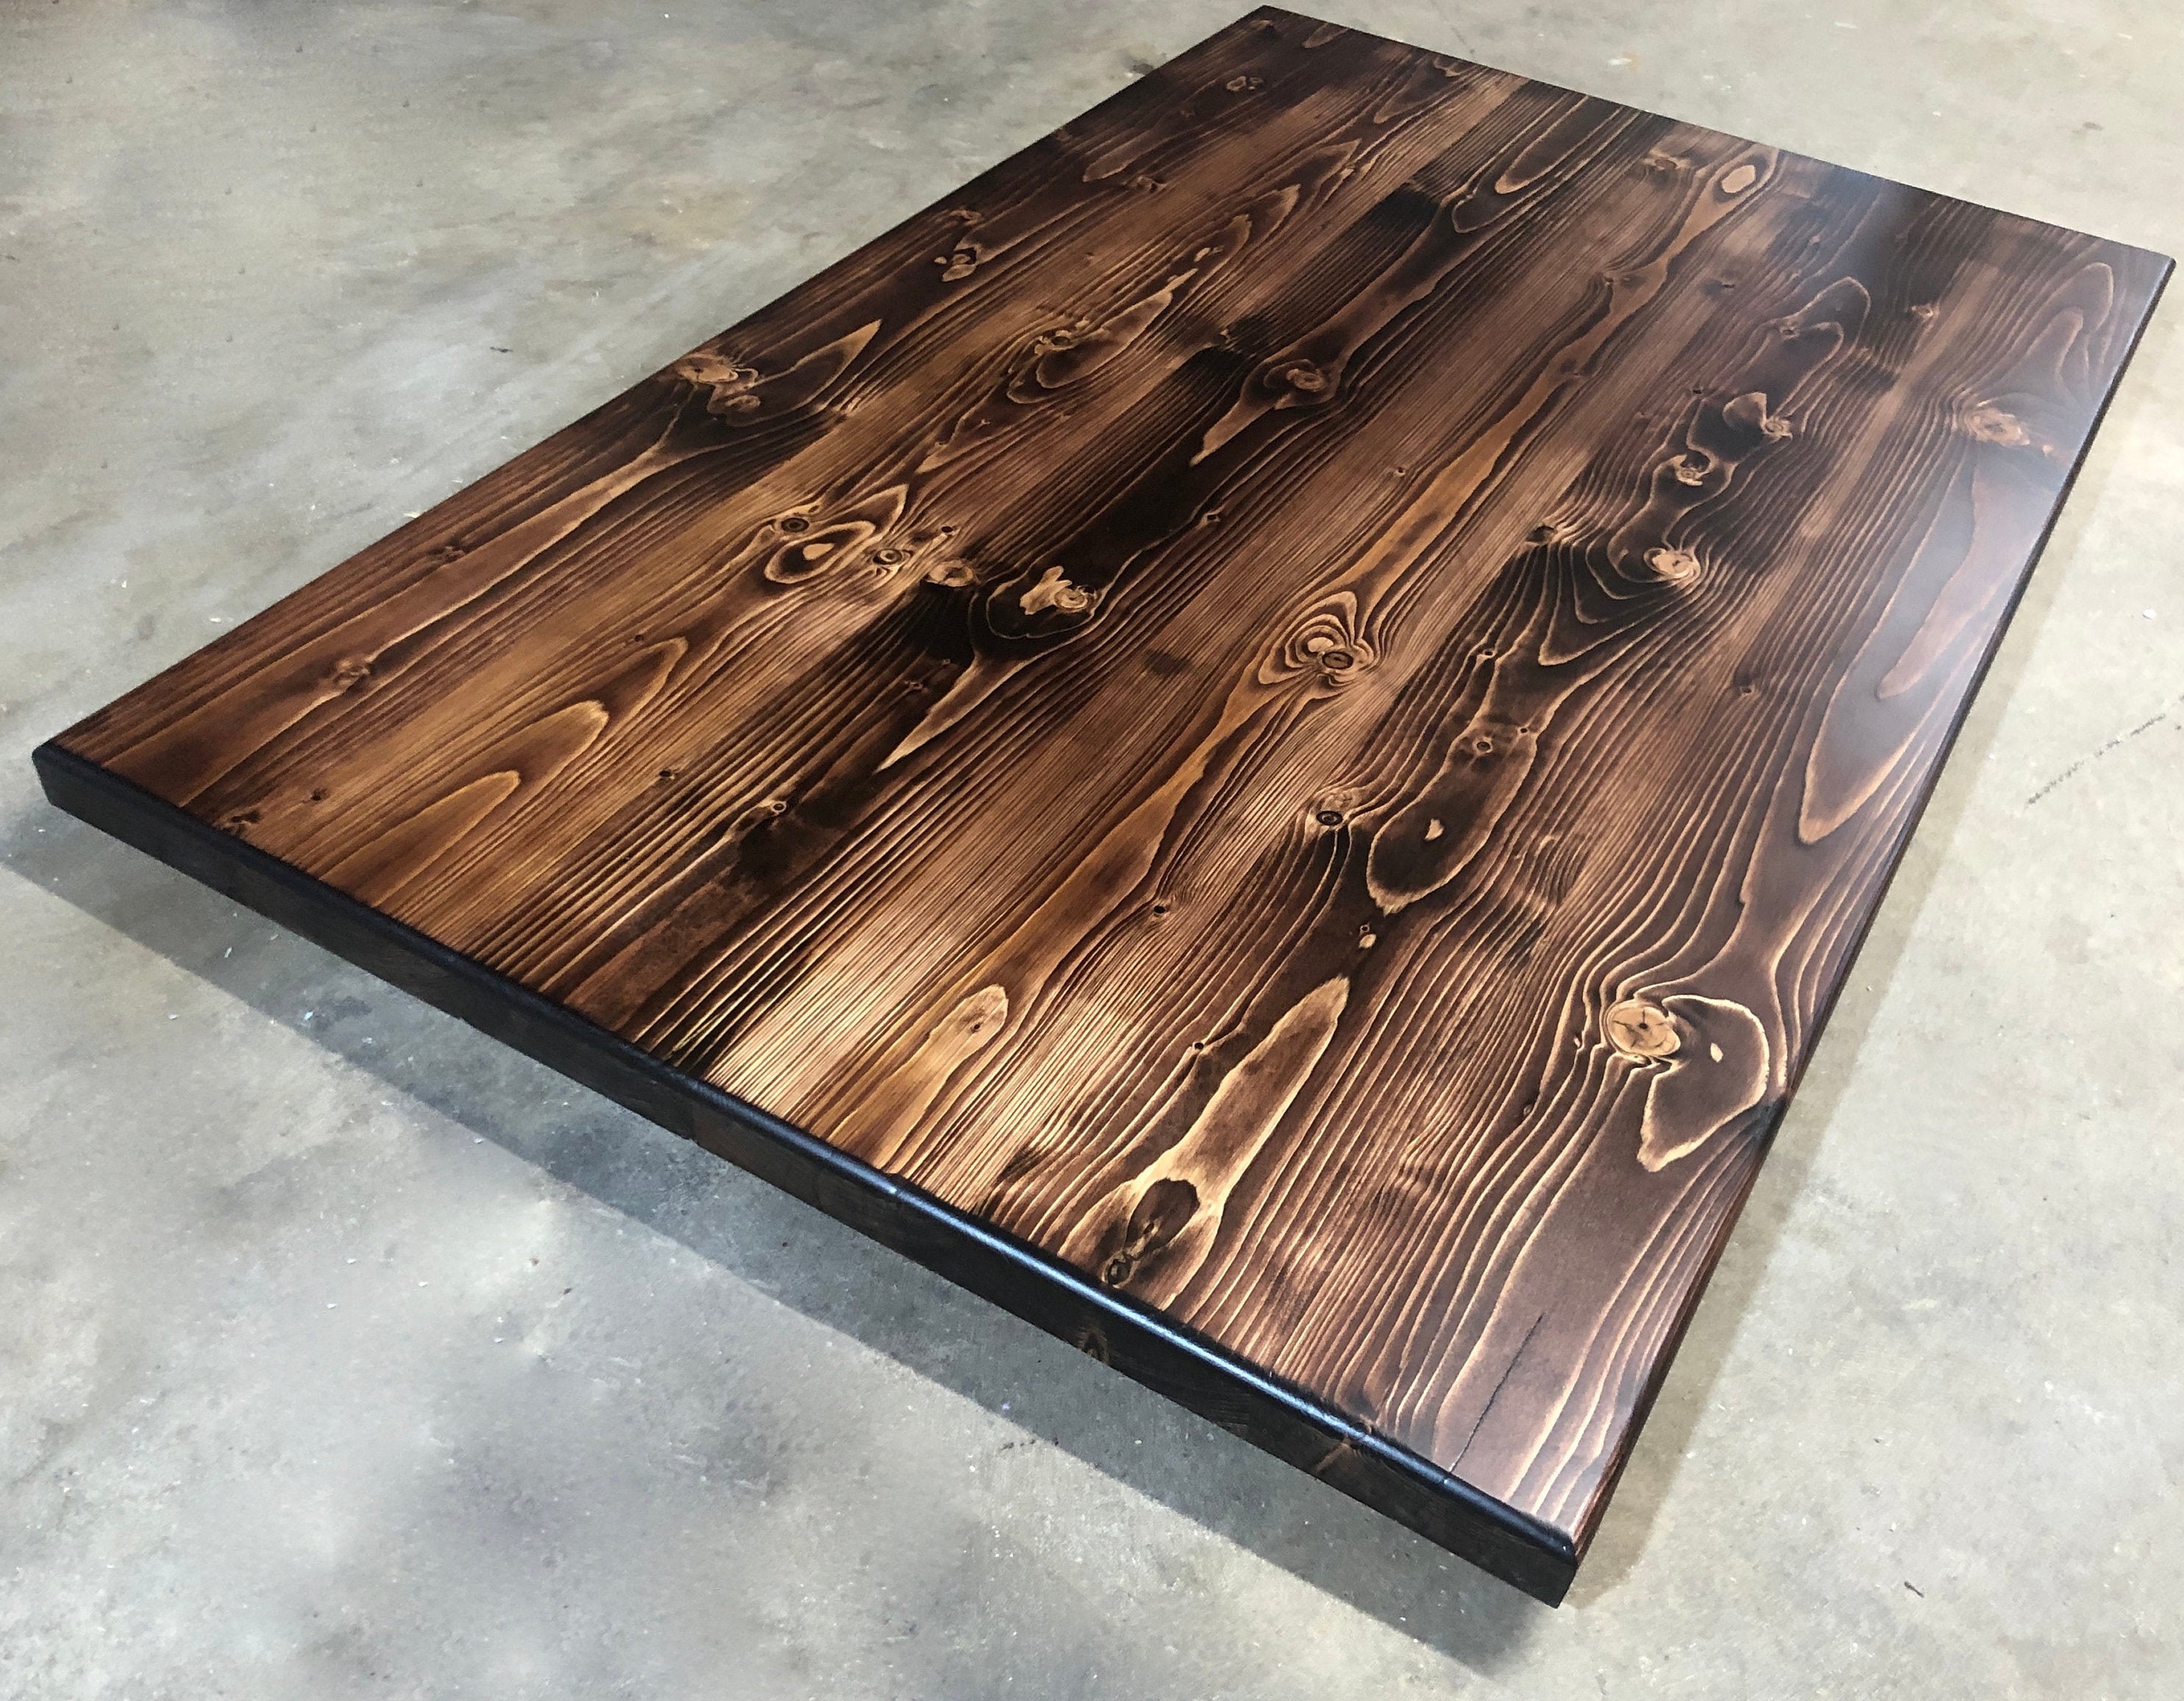 Rustic Reclaimed Wood Desk Home Bar, Rustic Wooden Desk Top